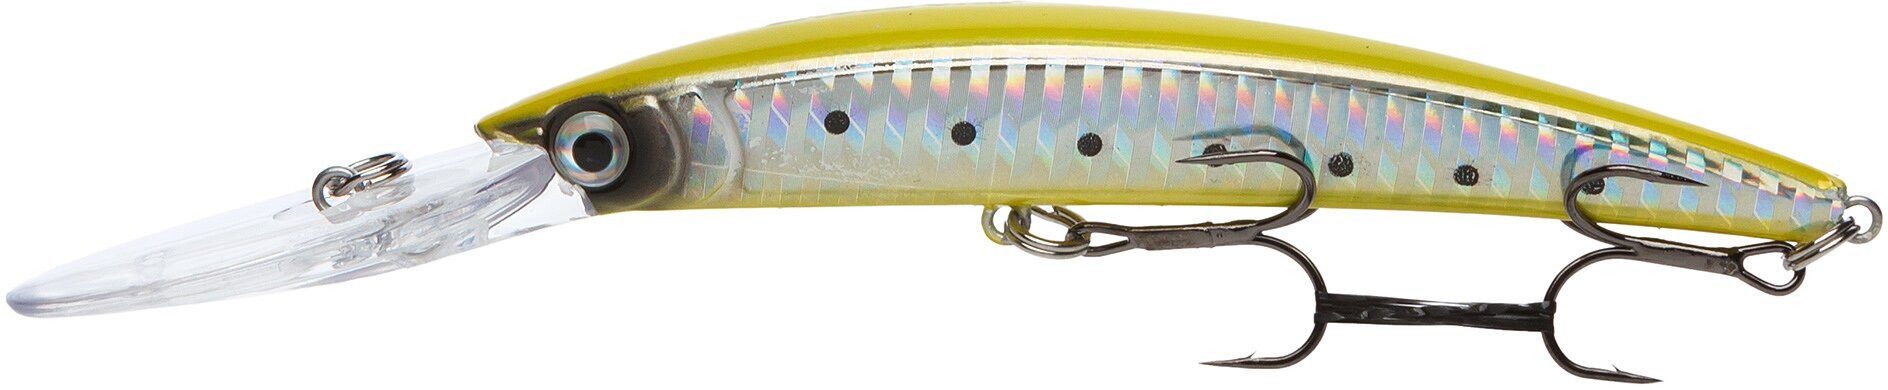 Воблер EAGLE GRIP Crysnal 3D Minnow 90 mm YYZ528 Yellow плавающий 9,5 гр. Форма и расцветка японские.